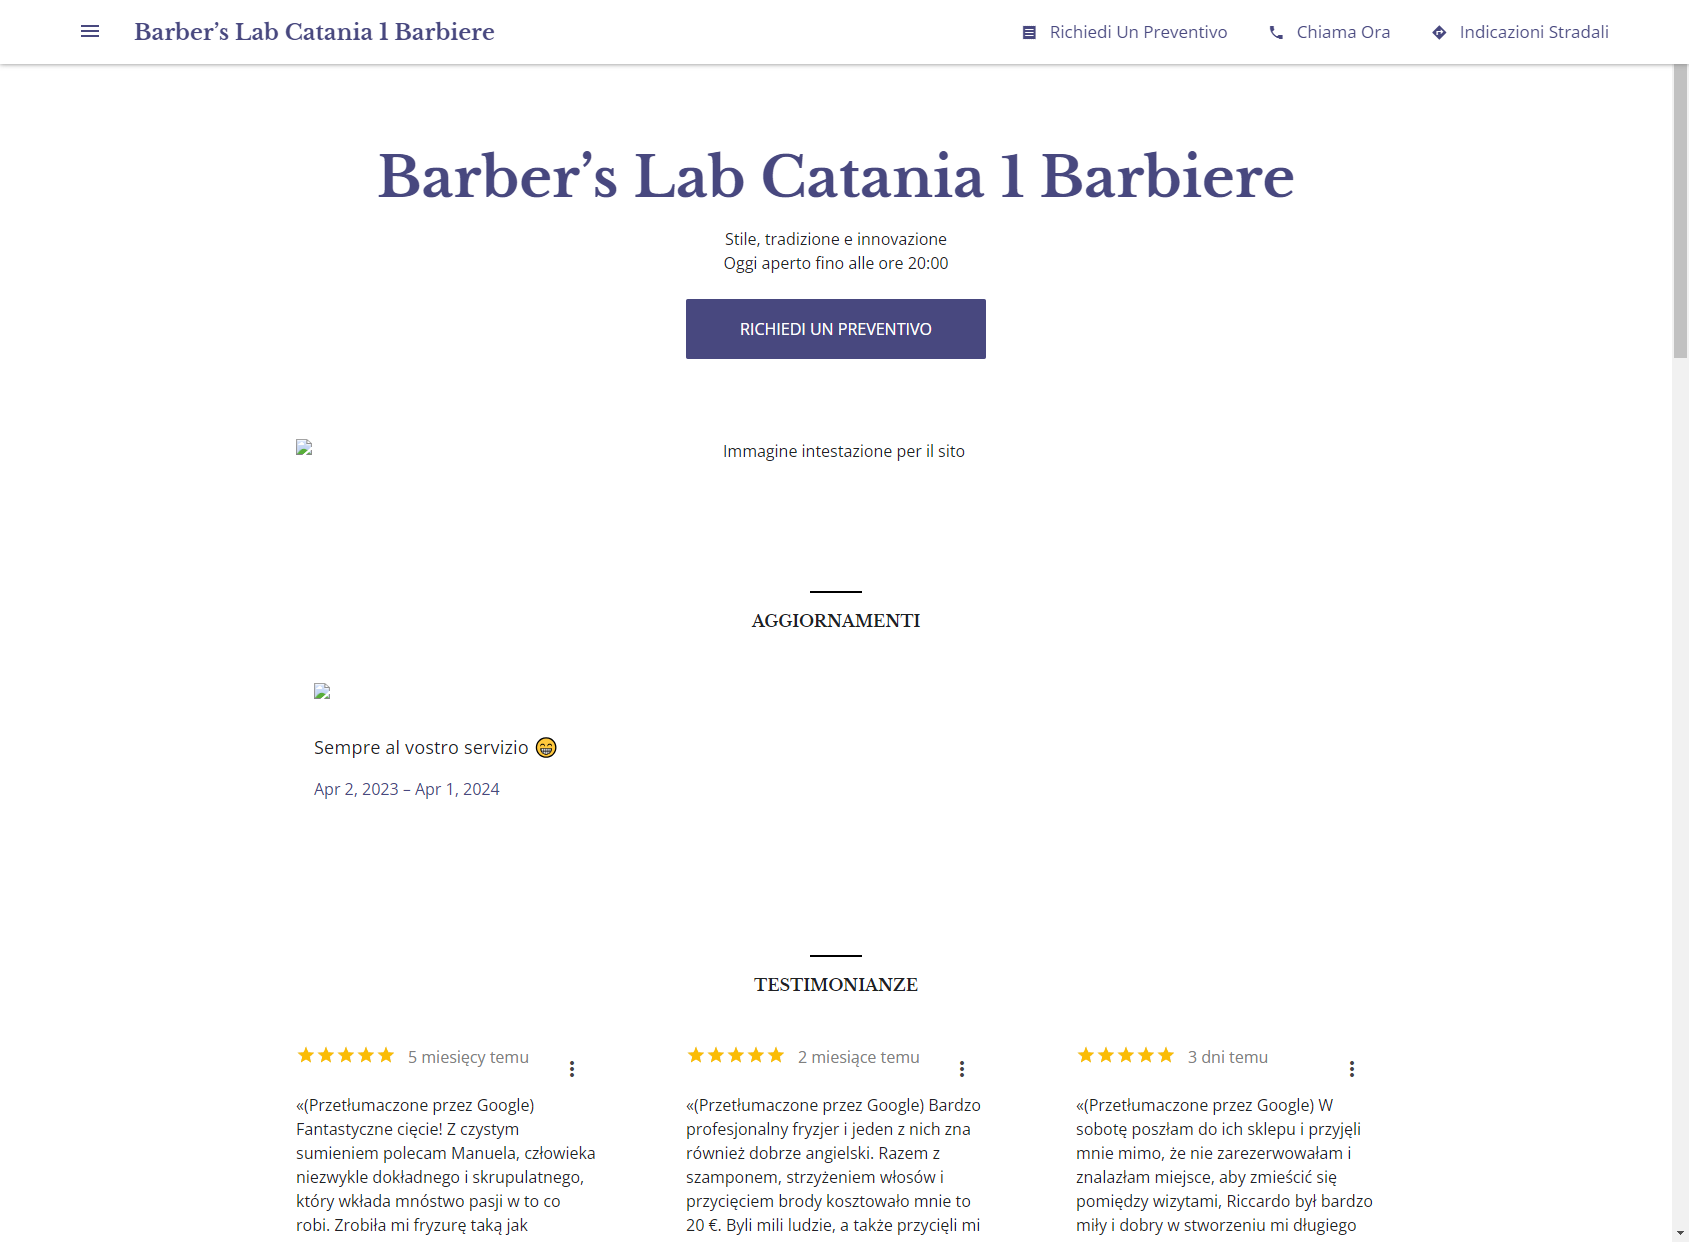 Barber’s Lab Catania 1 Barbiere